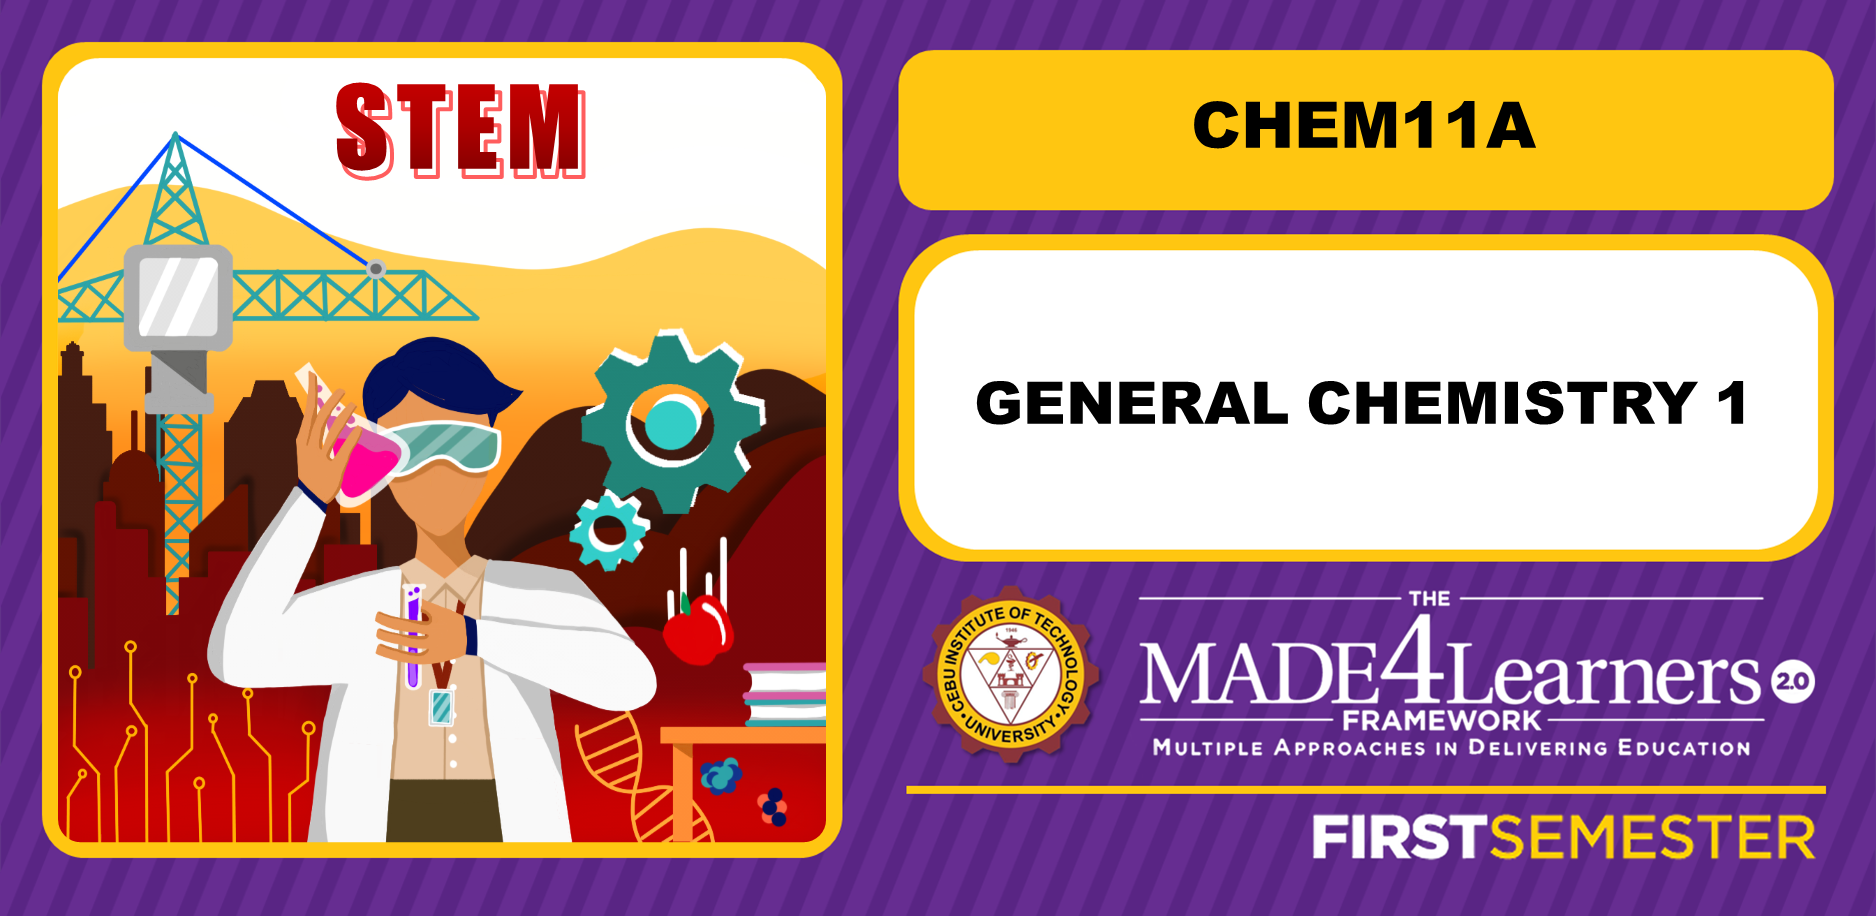 CHEM11A: General Chemistry 1